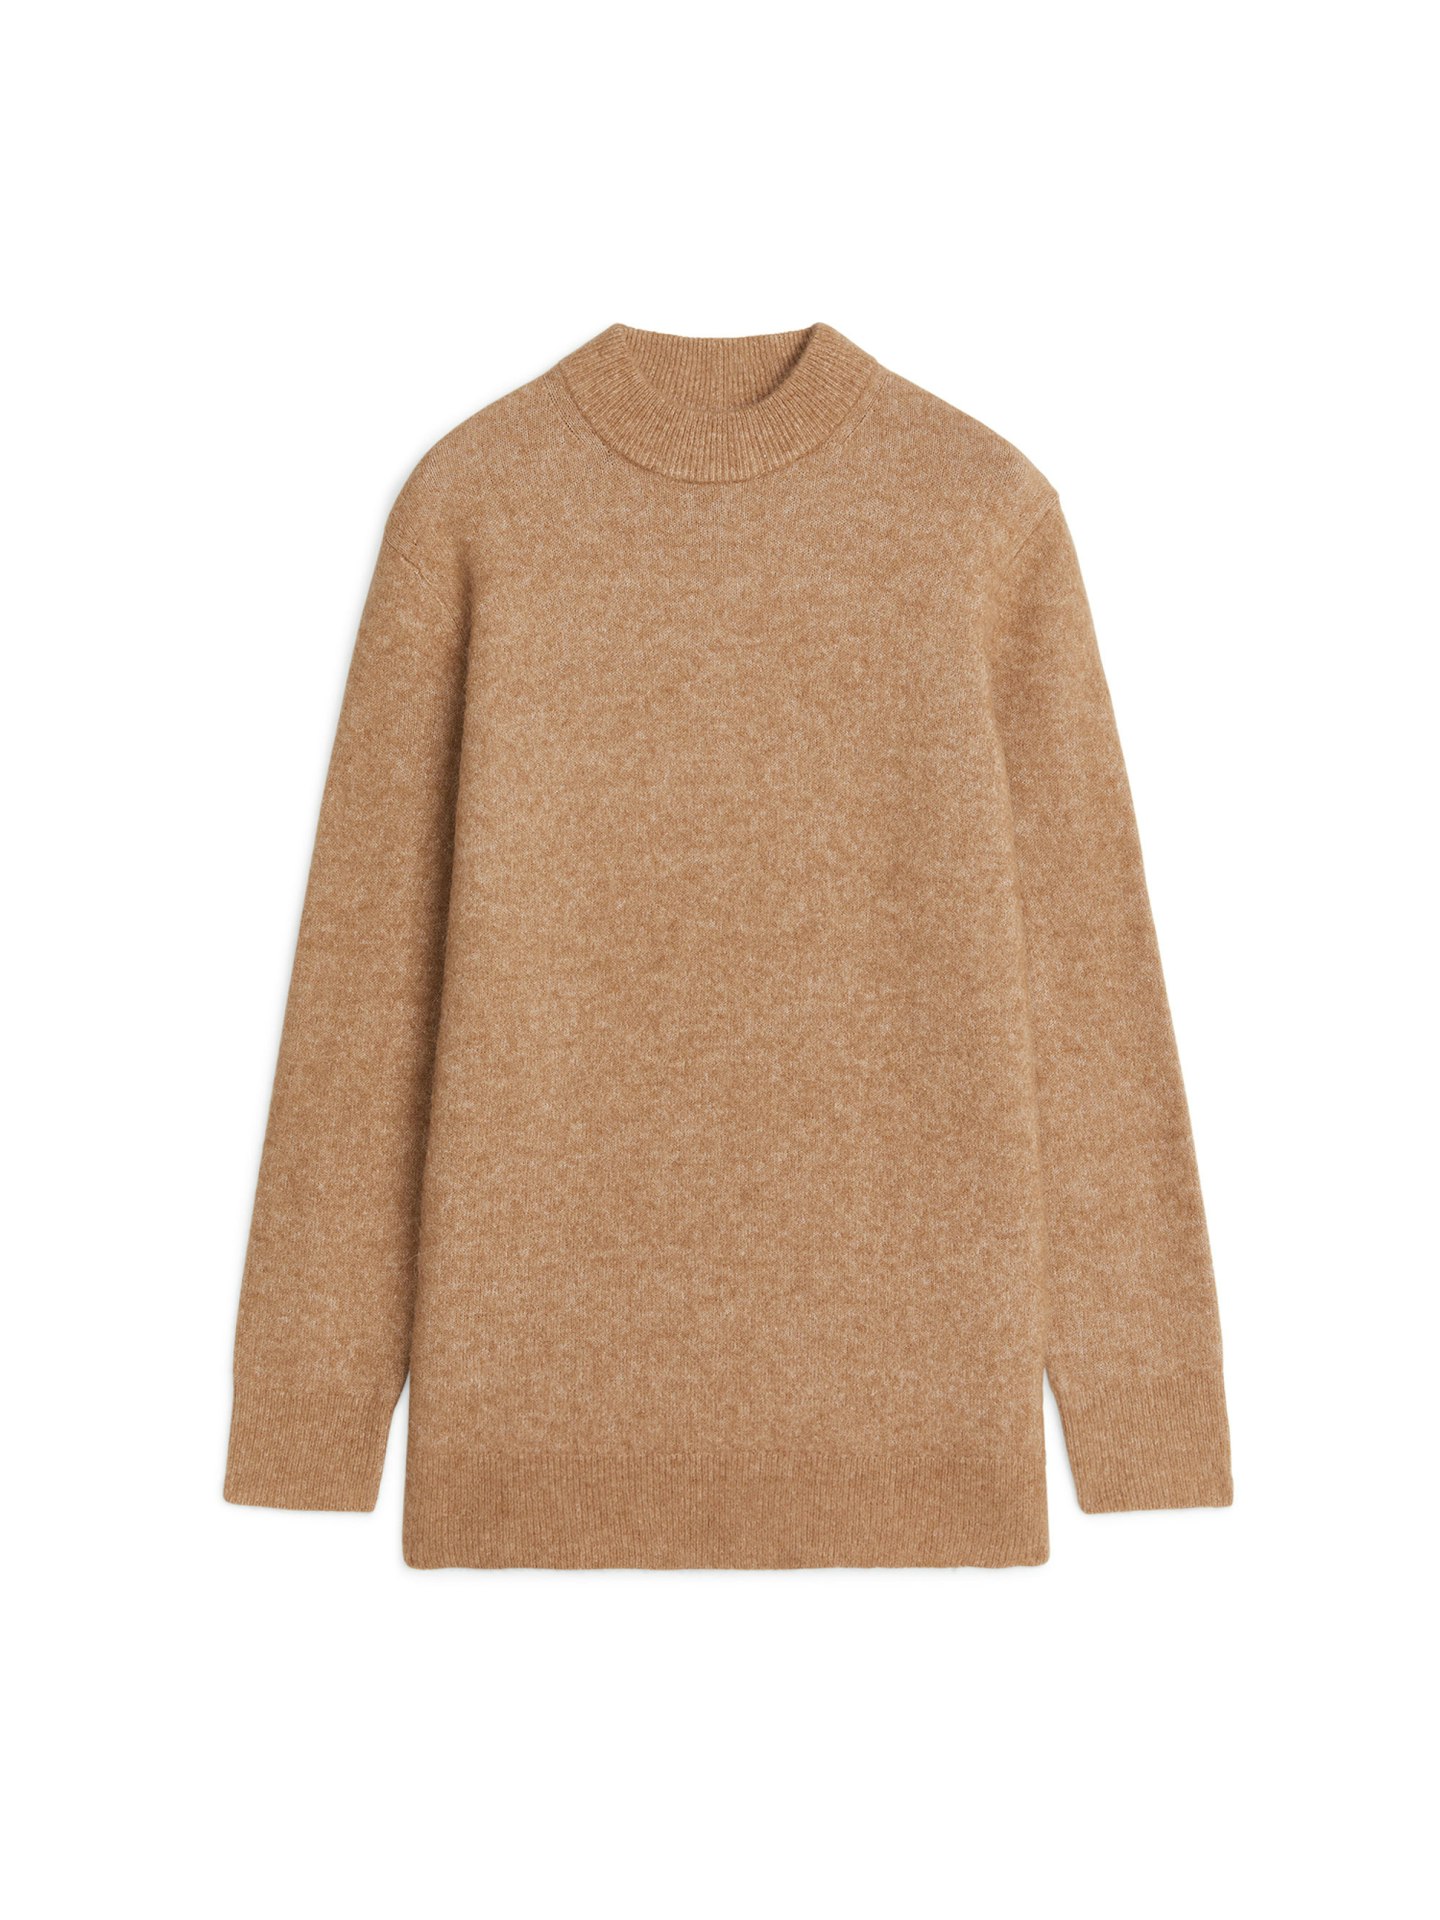 Arket, Alpaca Blend Knitted Tunic, £79